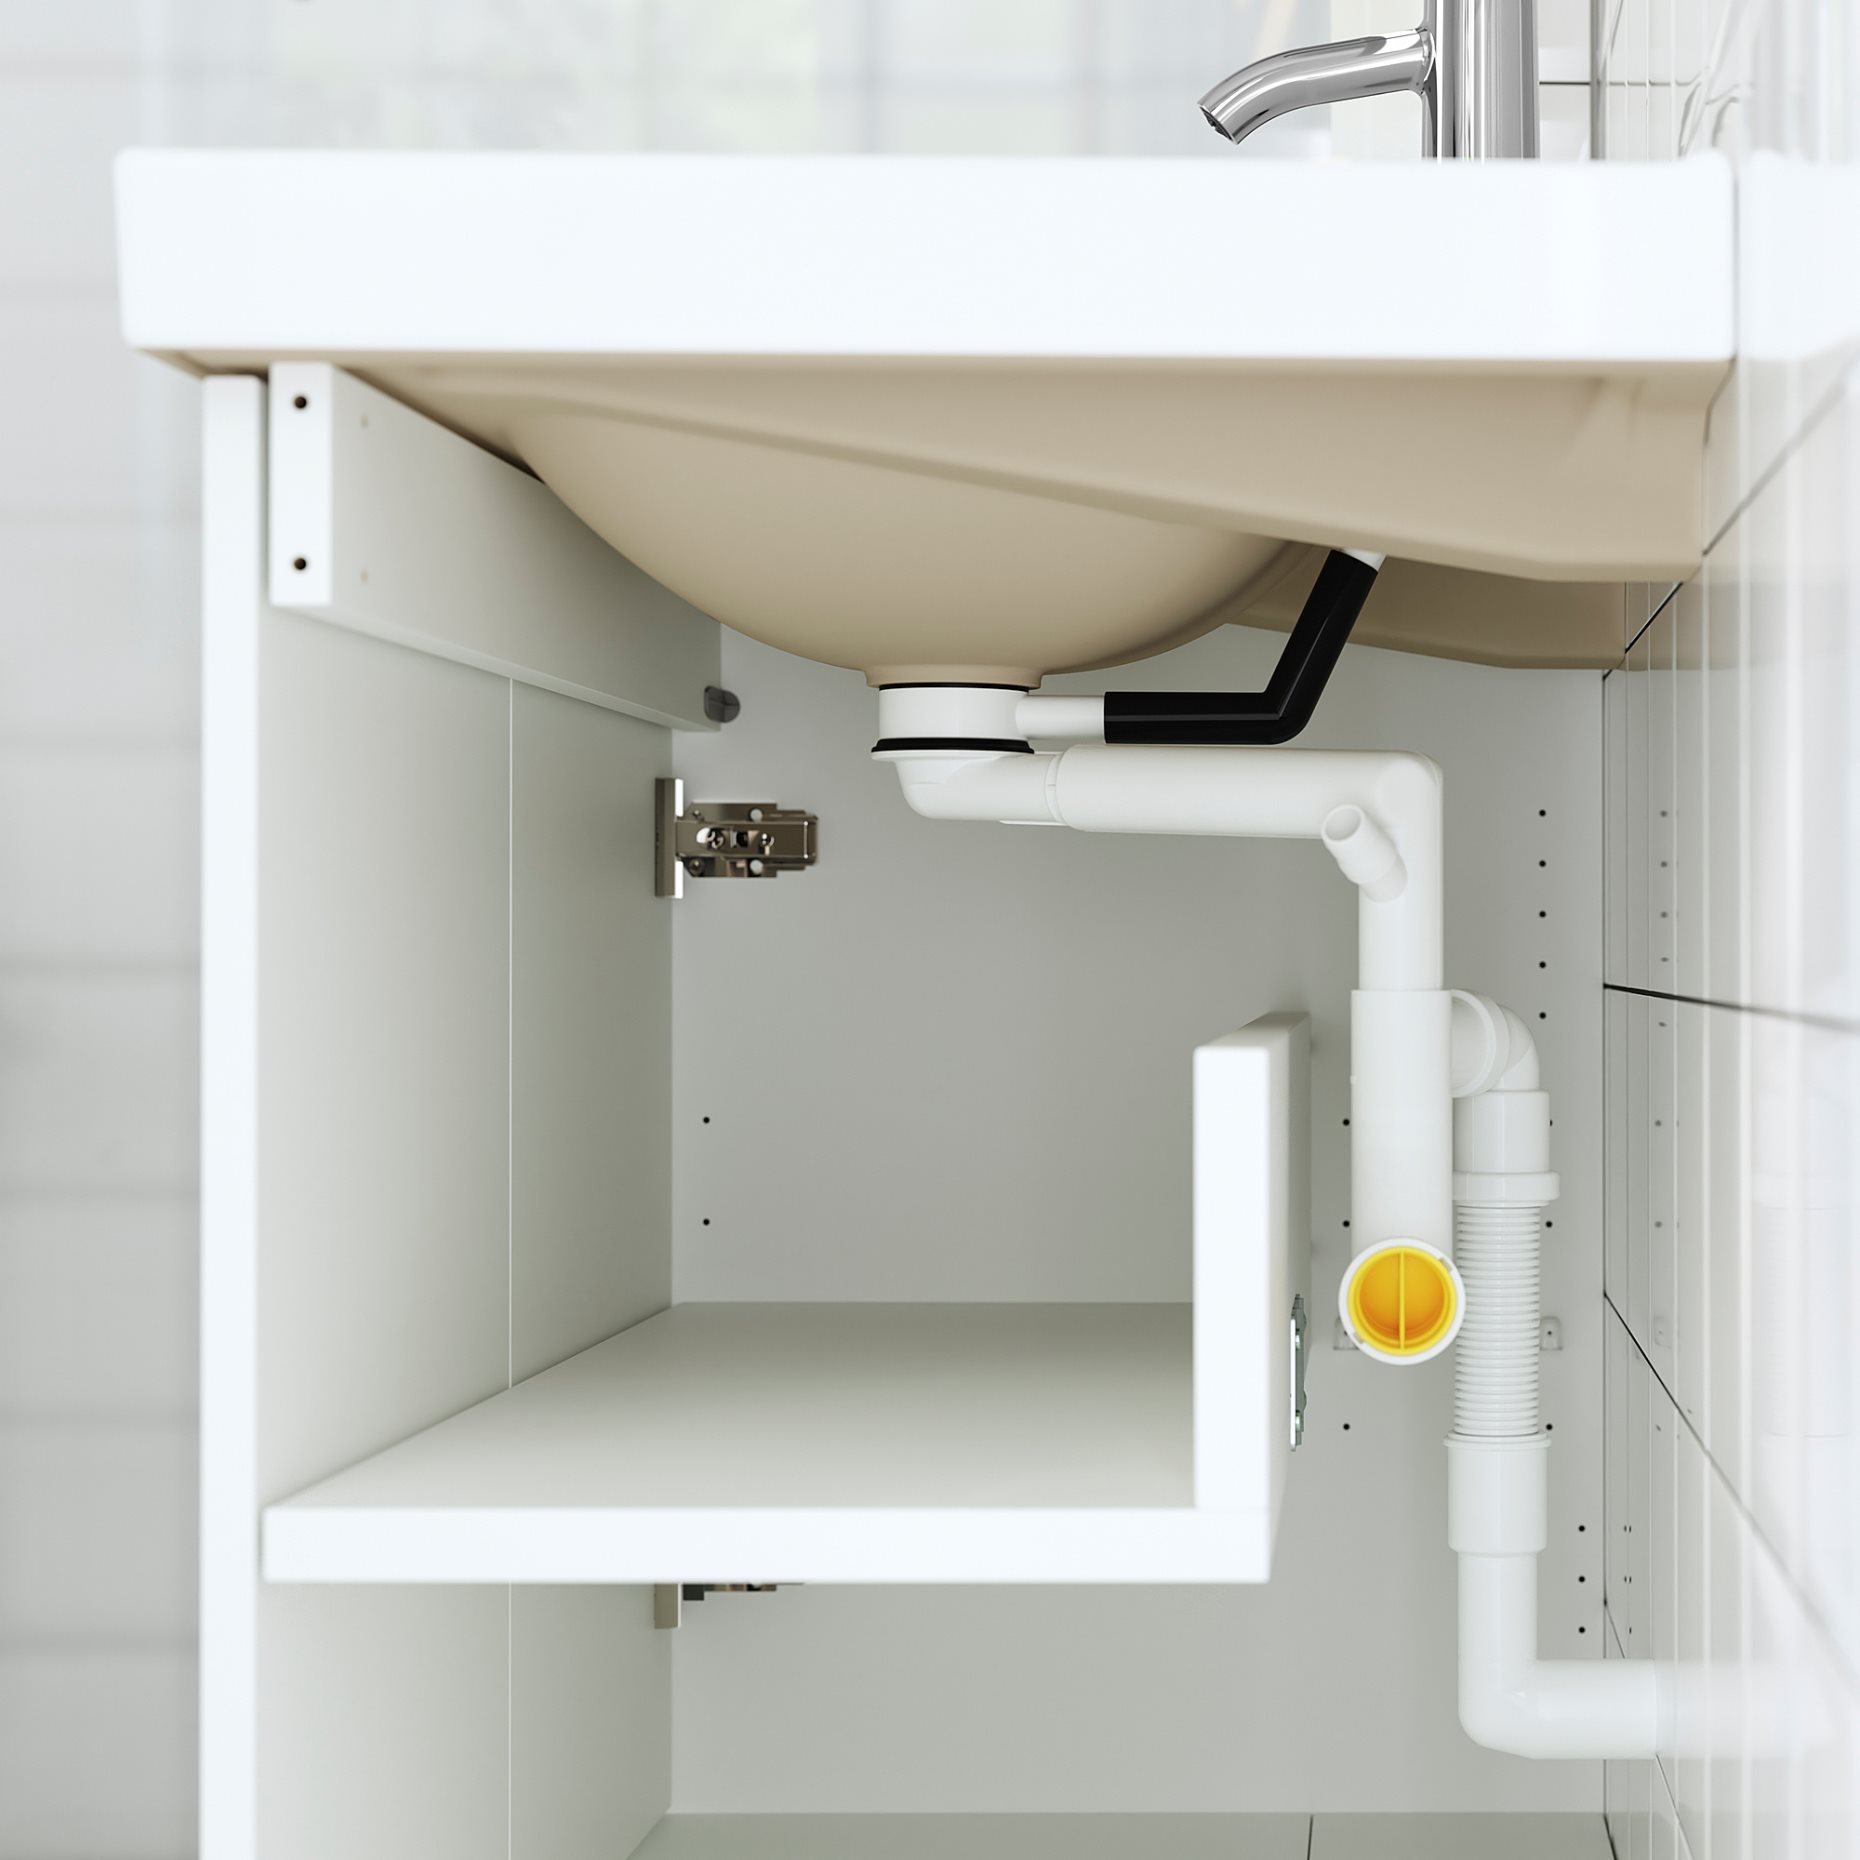 HAVBACK/ORRSJON, wash-stand with doors/wash-basin/tap, 82x49x71 cm, 695.299.75